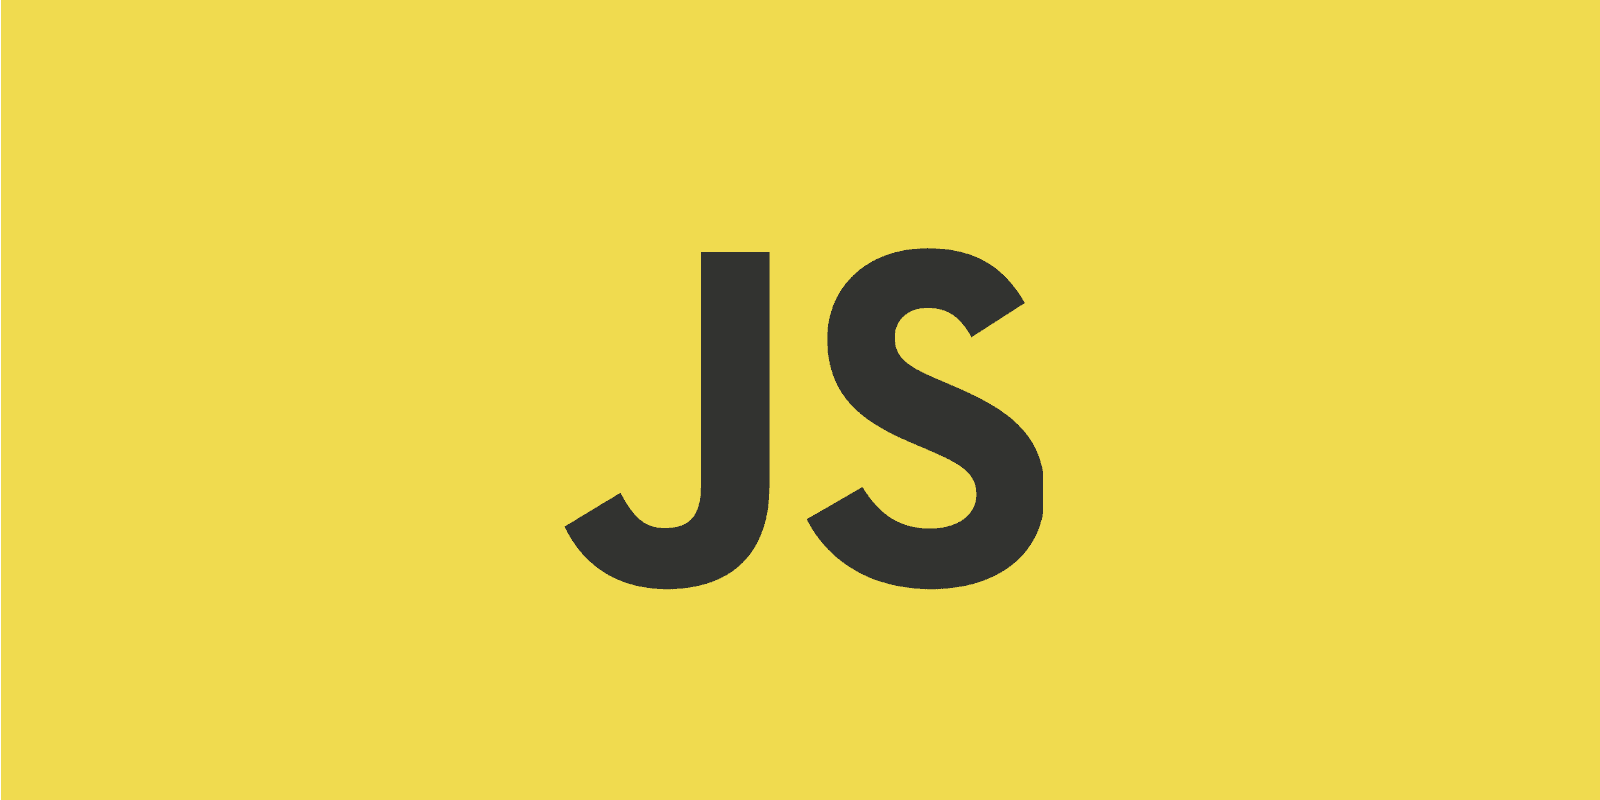 JavaScript functions in a nutshell